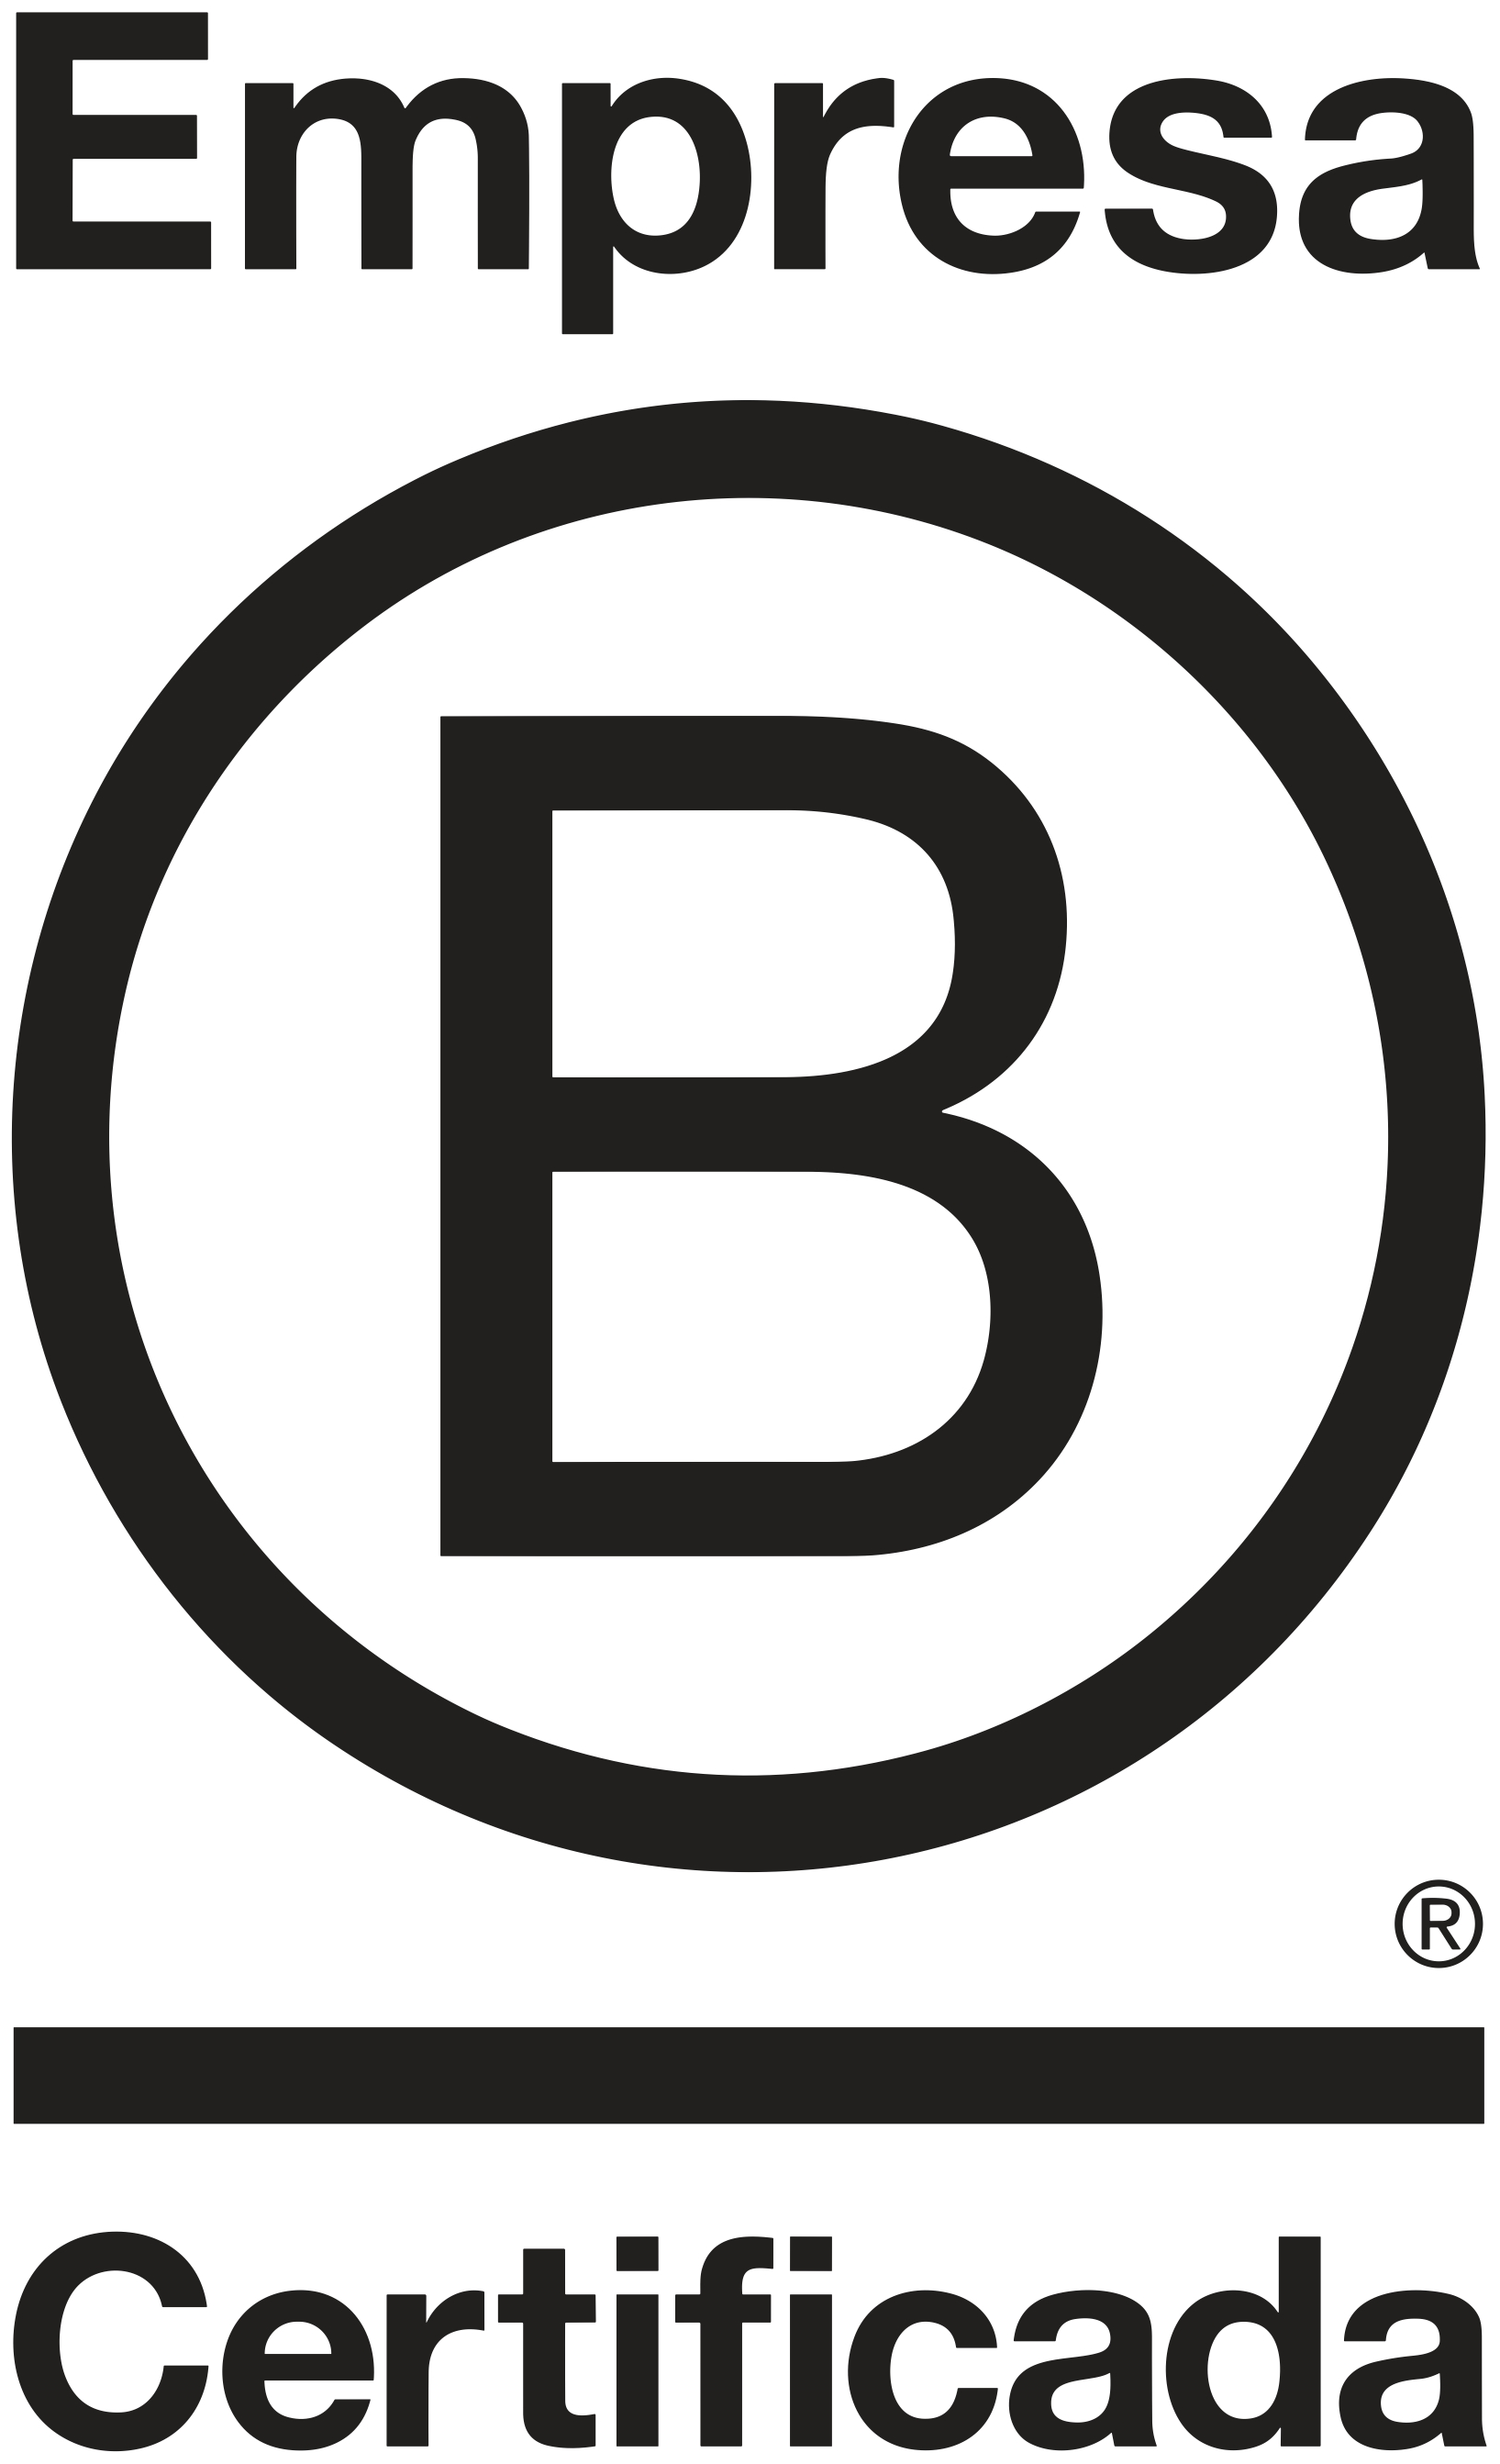 EmpresaBCertificada_Logo2021_Blanco_page-0001